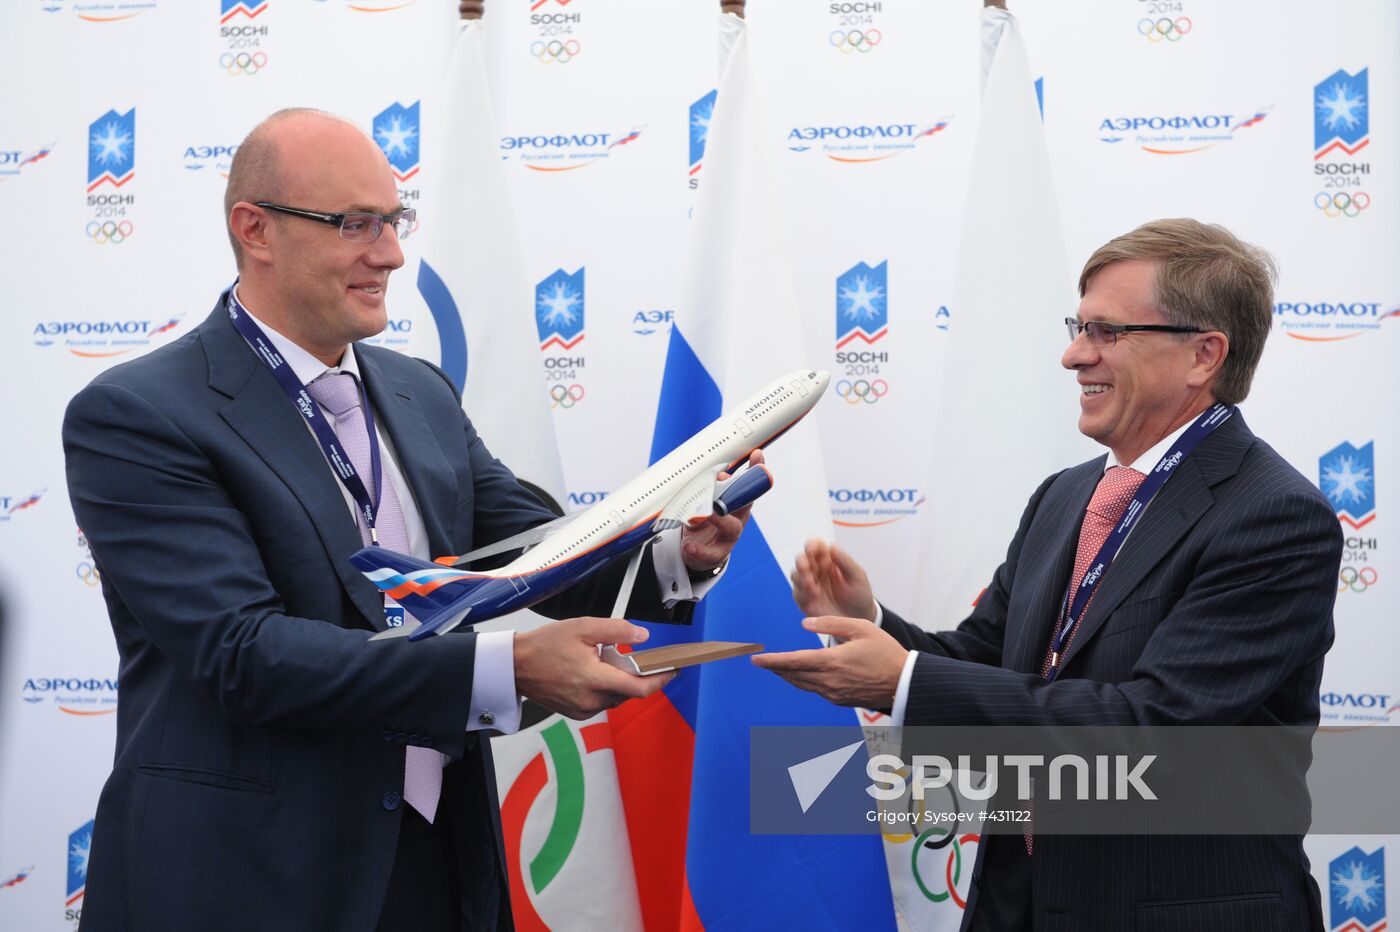 Aeroflot CEO and Sochi 2014 Organizing Committee chairman